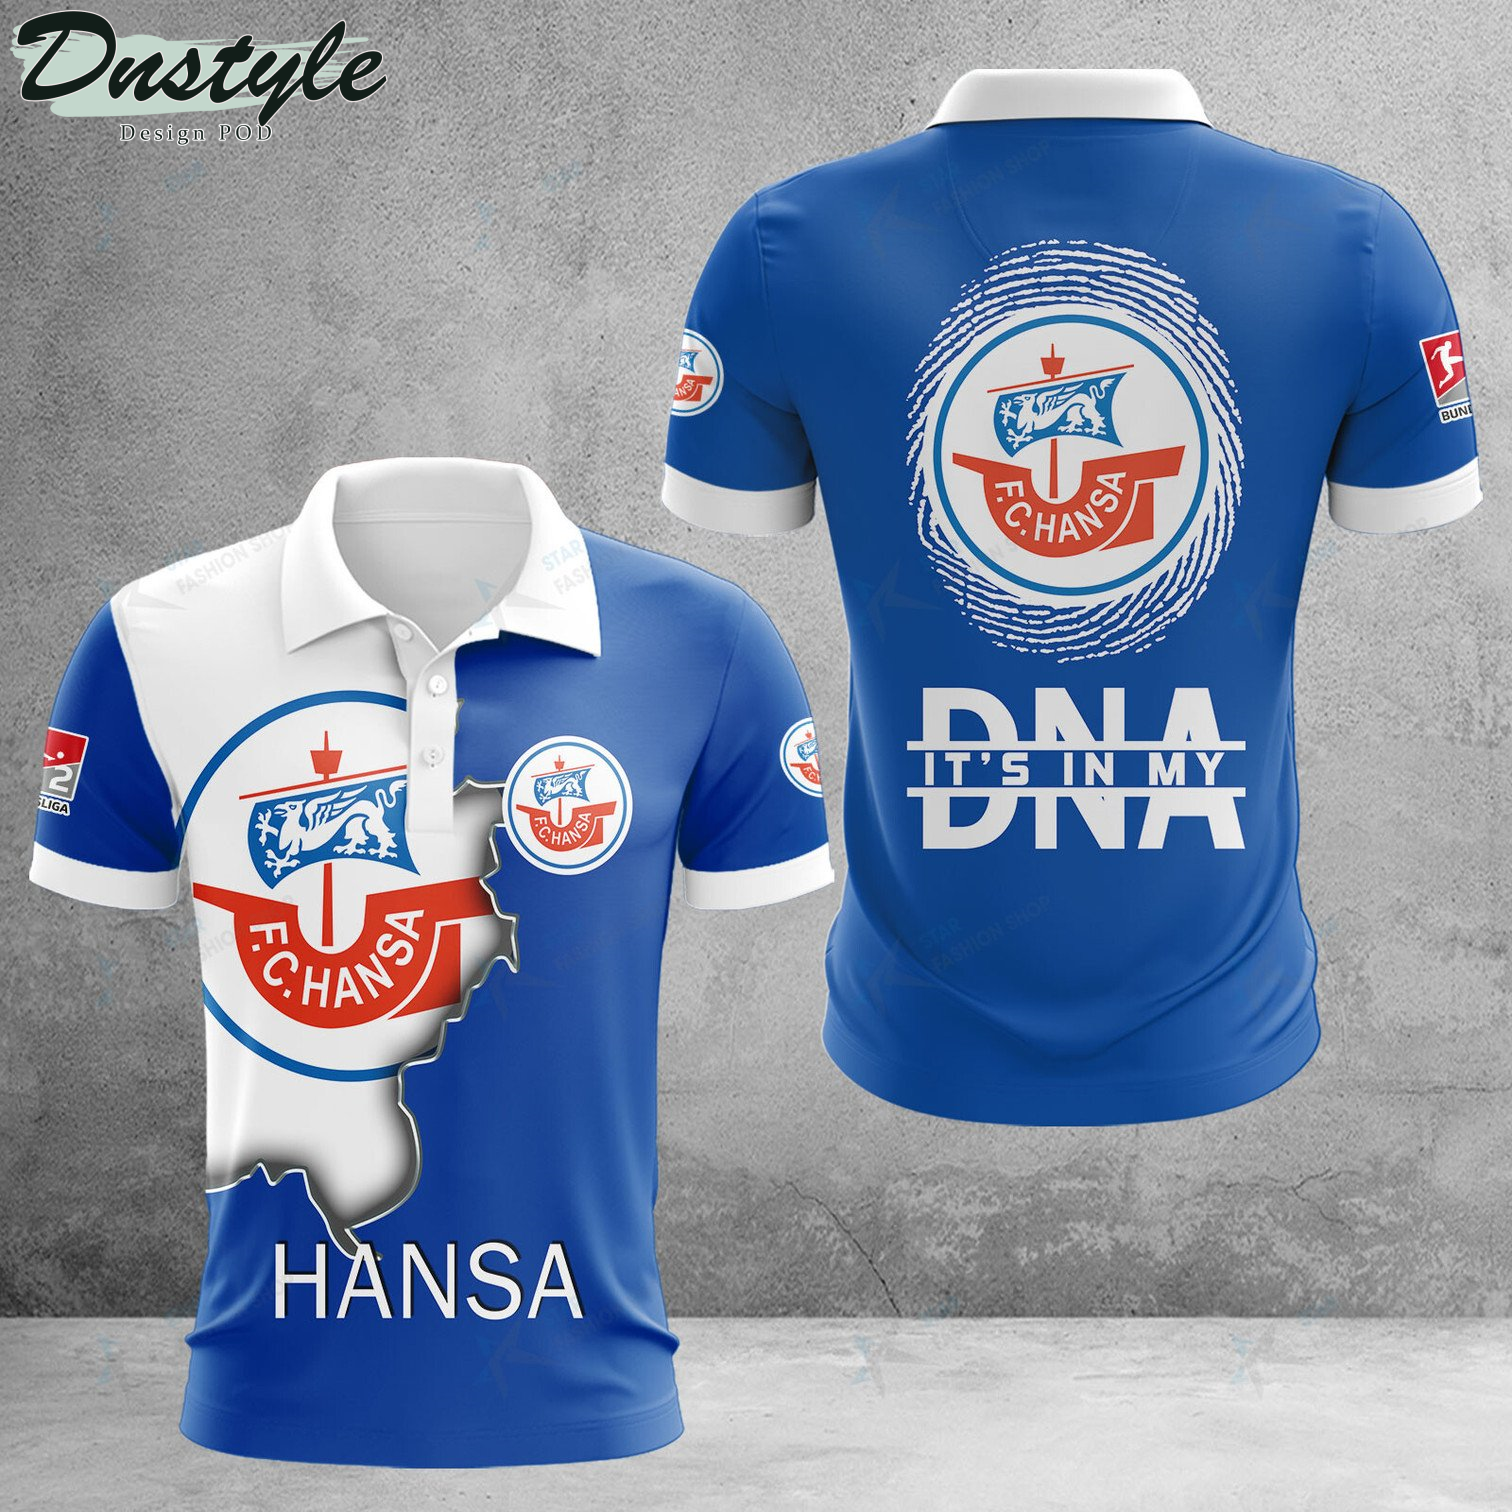 Hansa Rostock it's in my DNA polo shirt